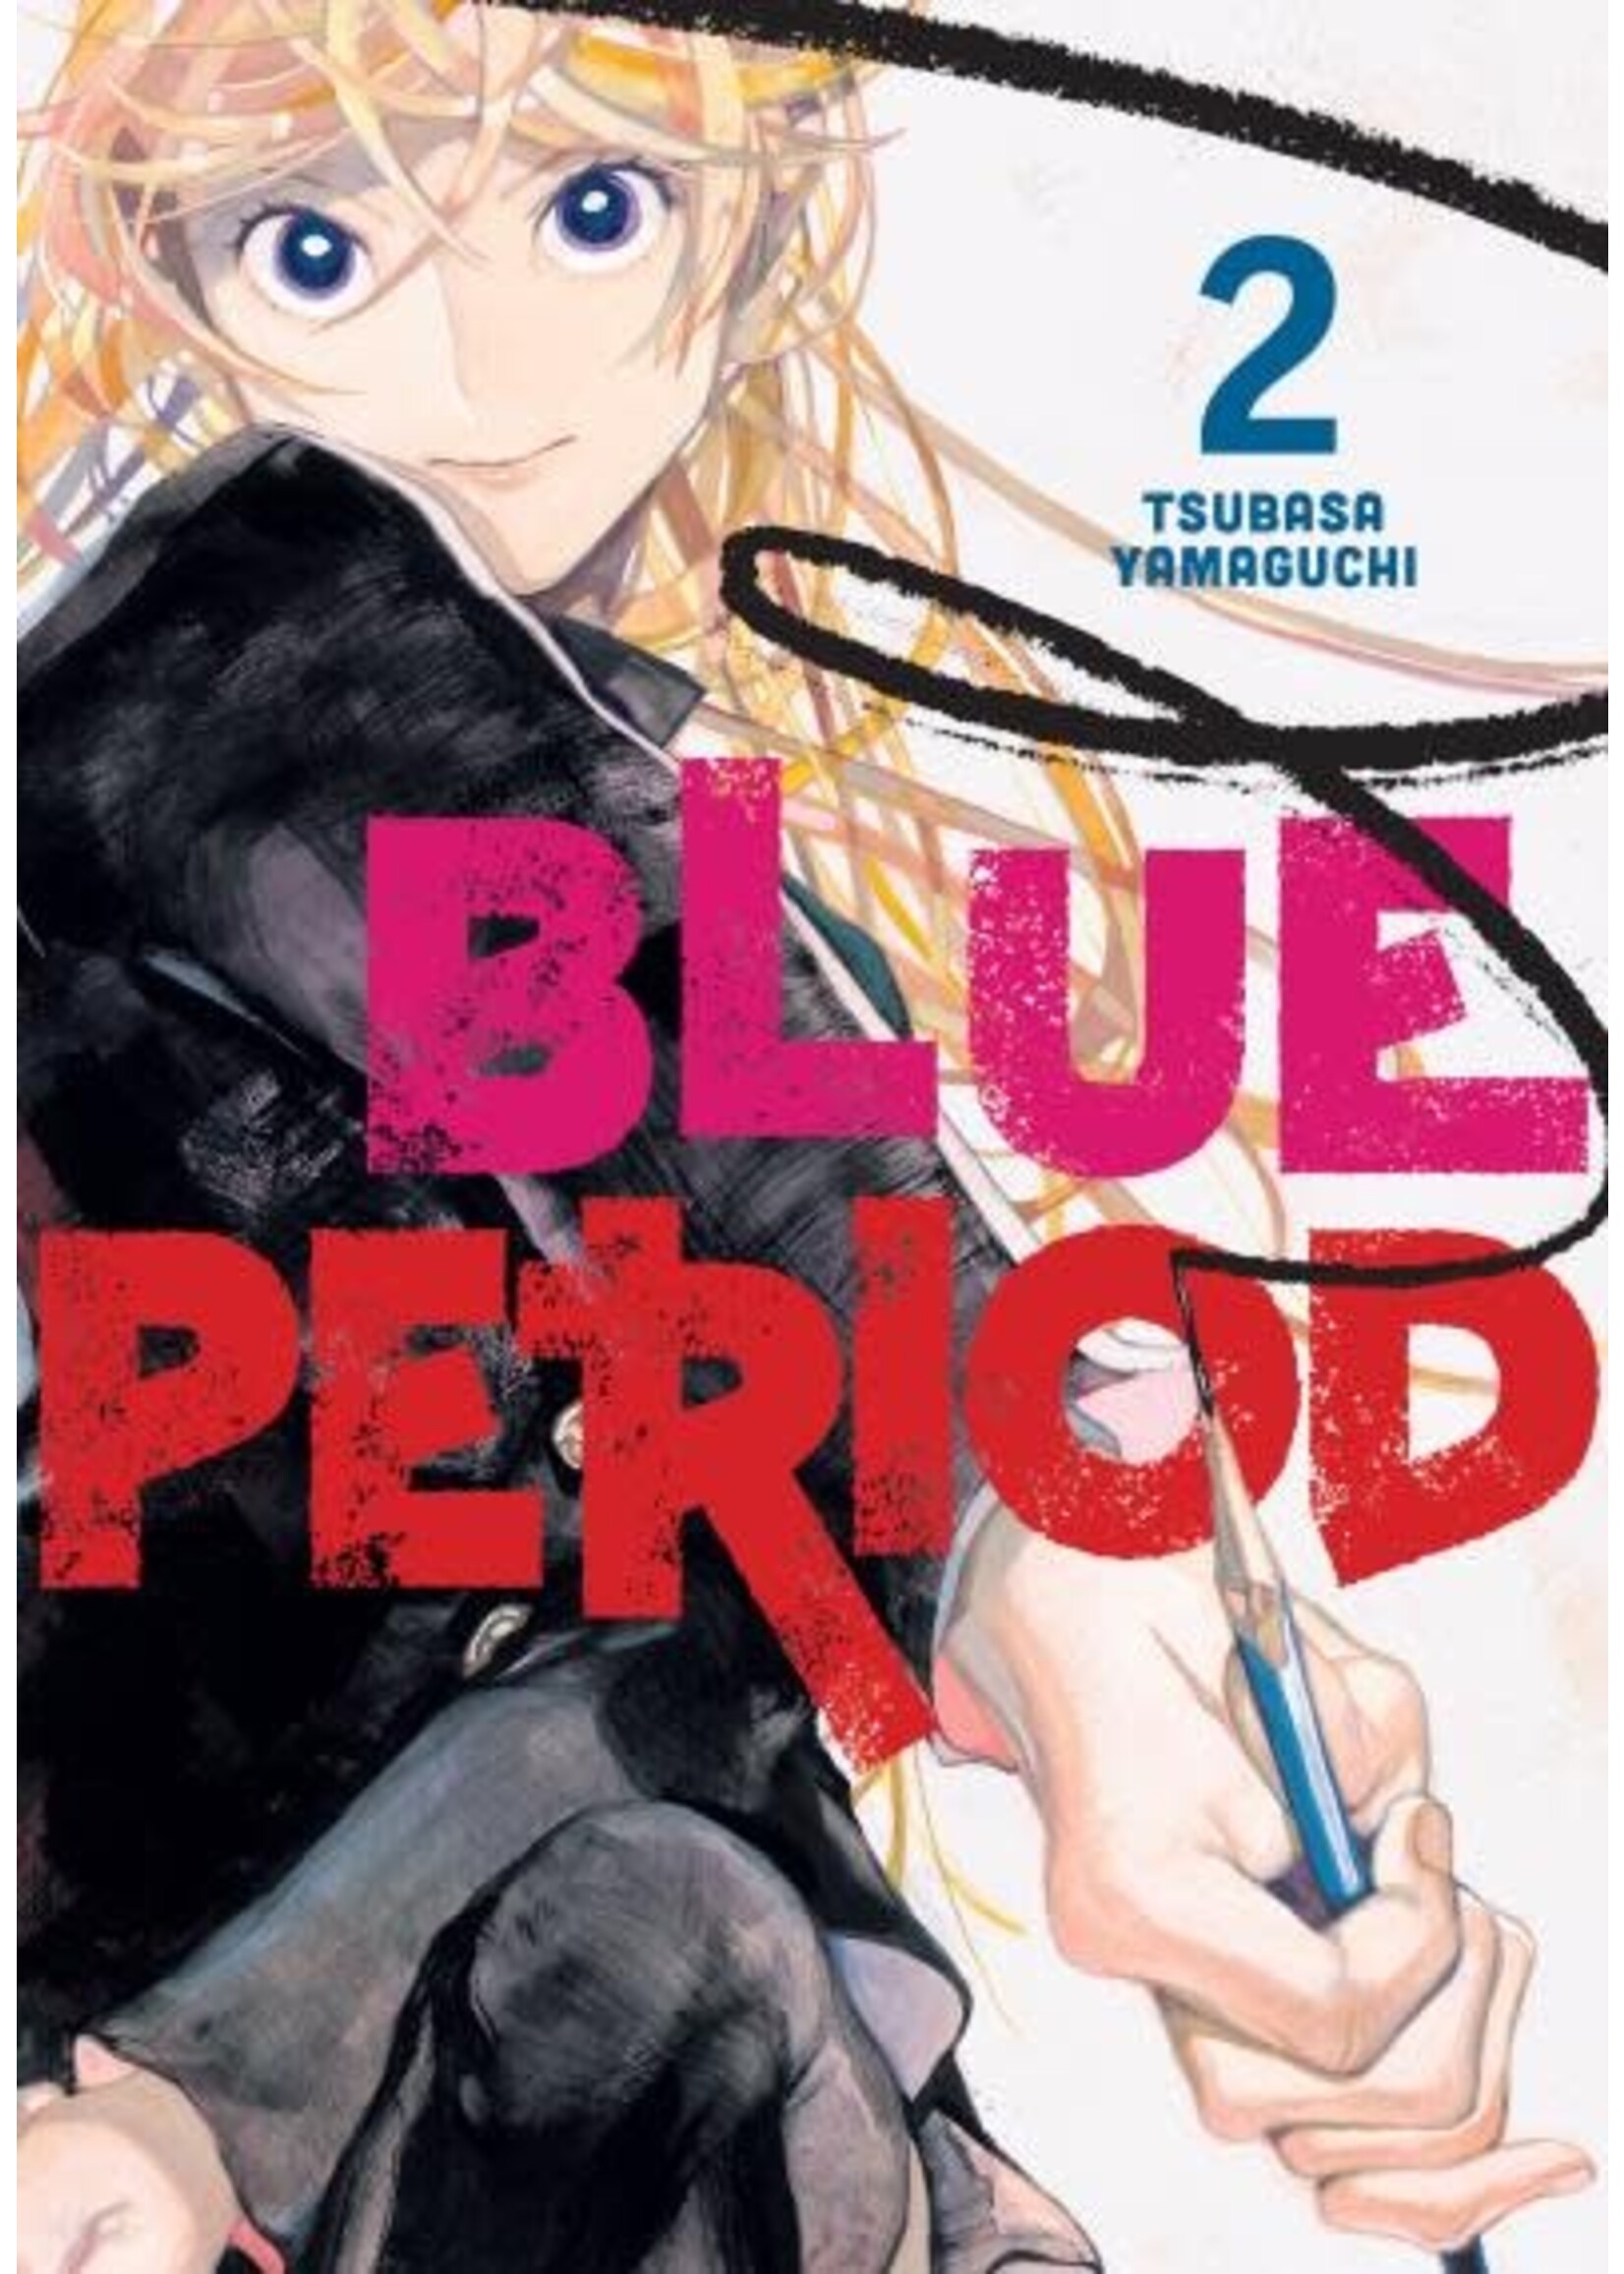 Blue Period, Vol. 2 by Tsubasa Yamaguchi